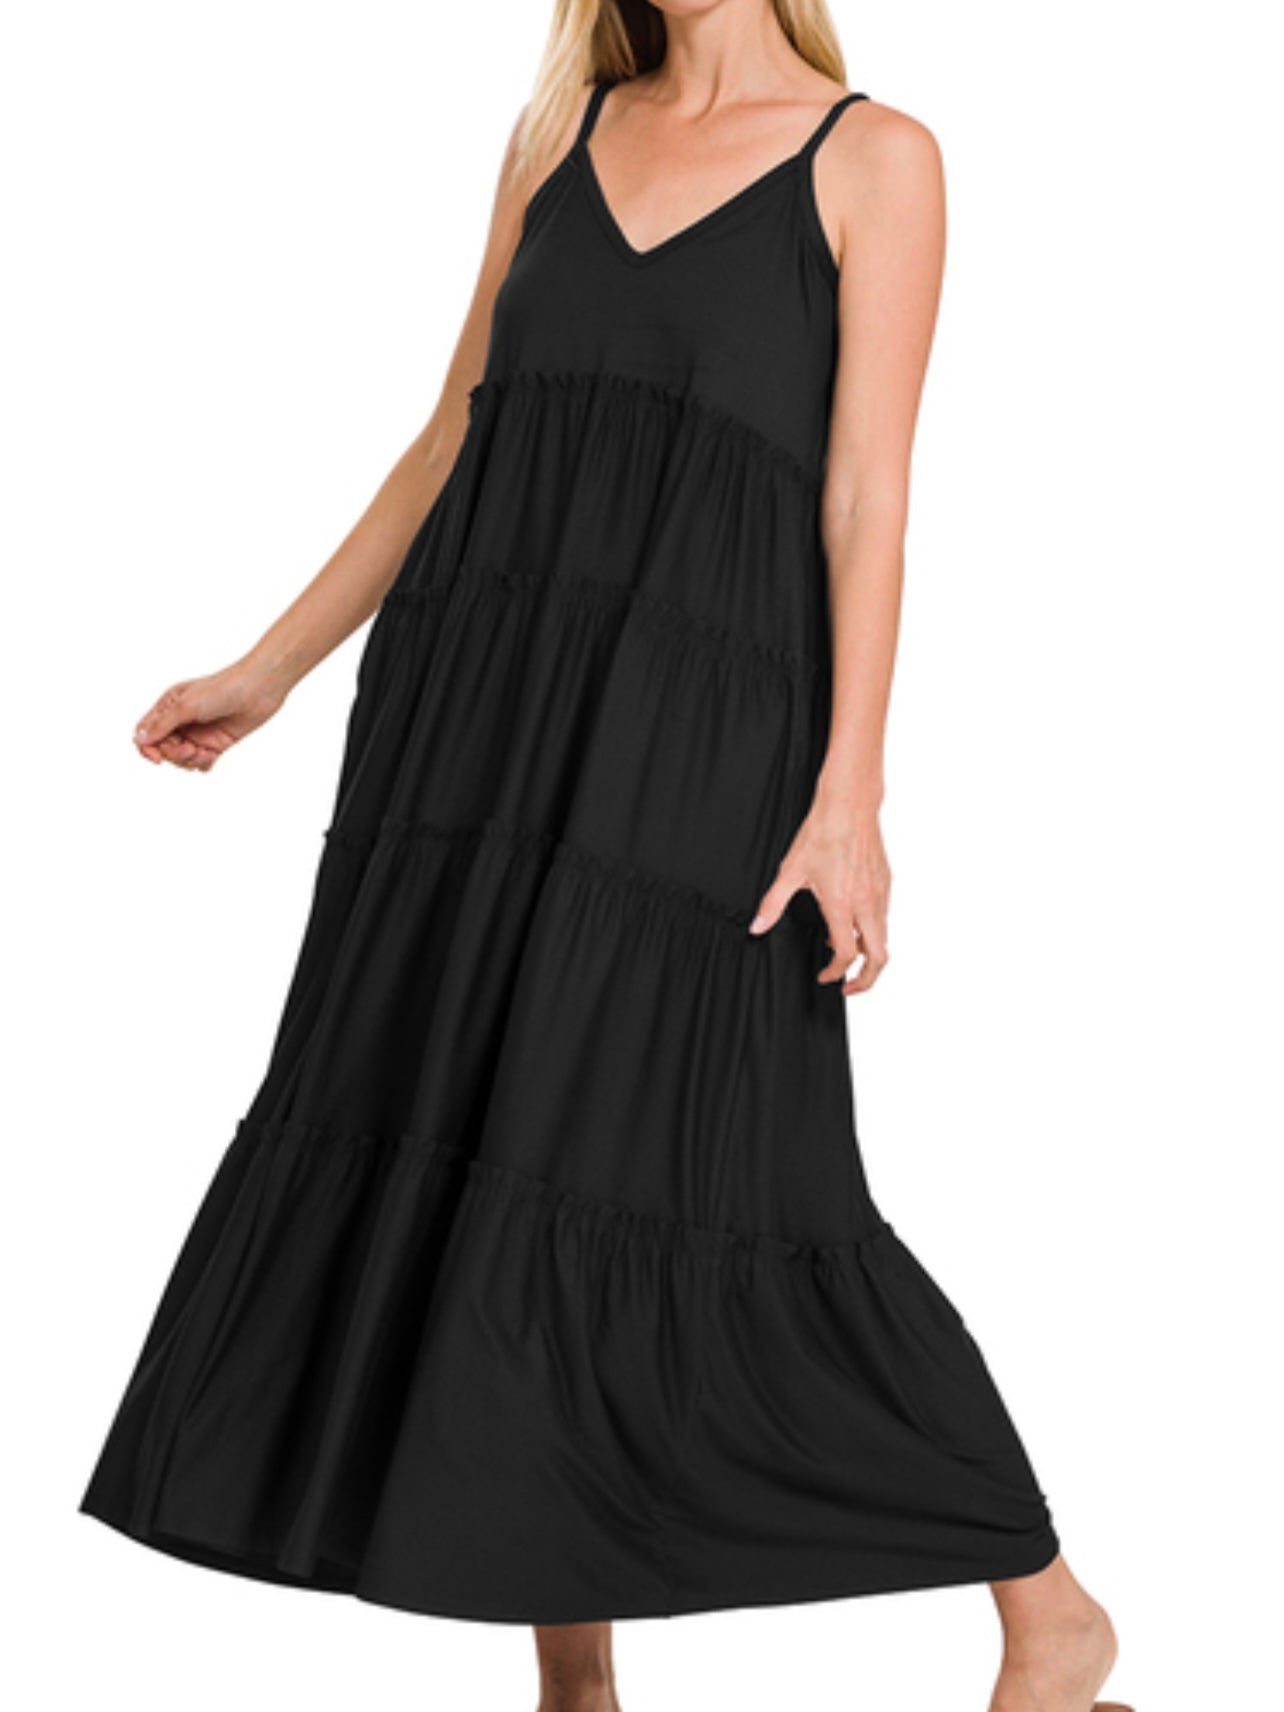 Terra Dress in Black